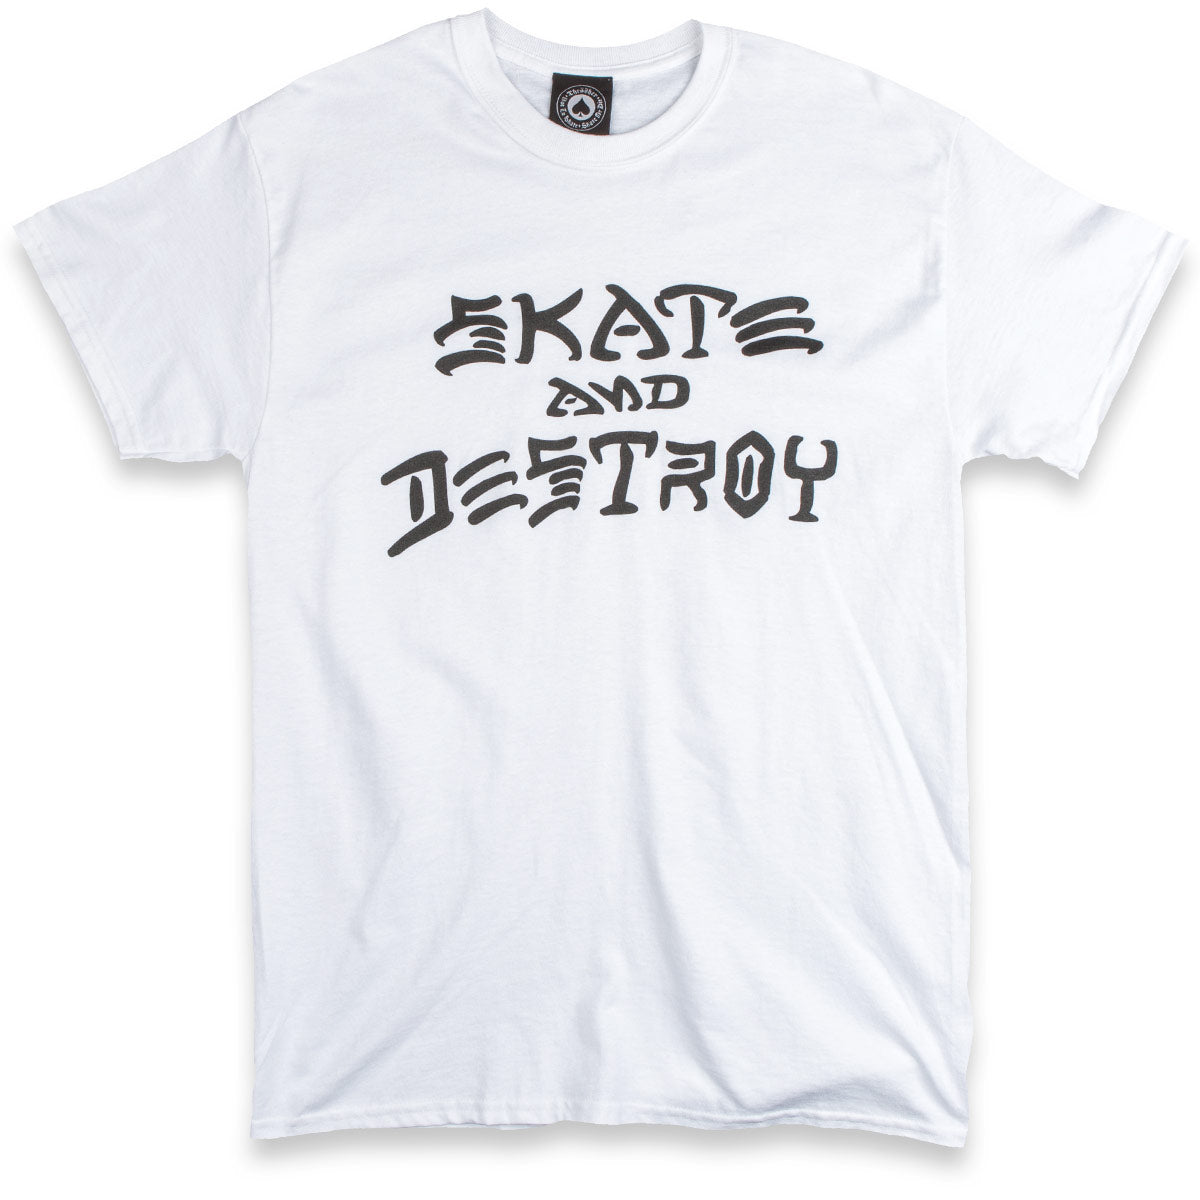 Thrasher Skate And Destroy T-Shirt - White image 1